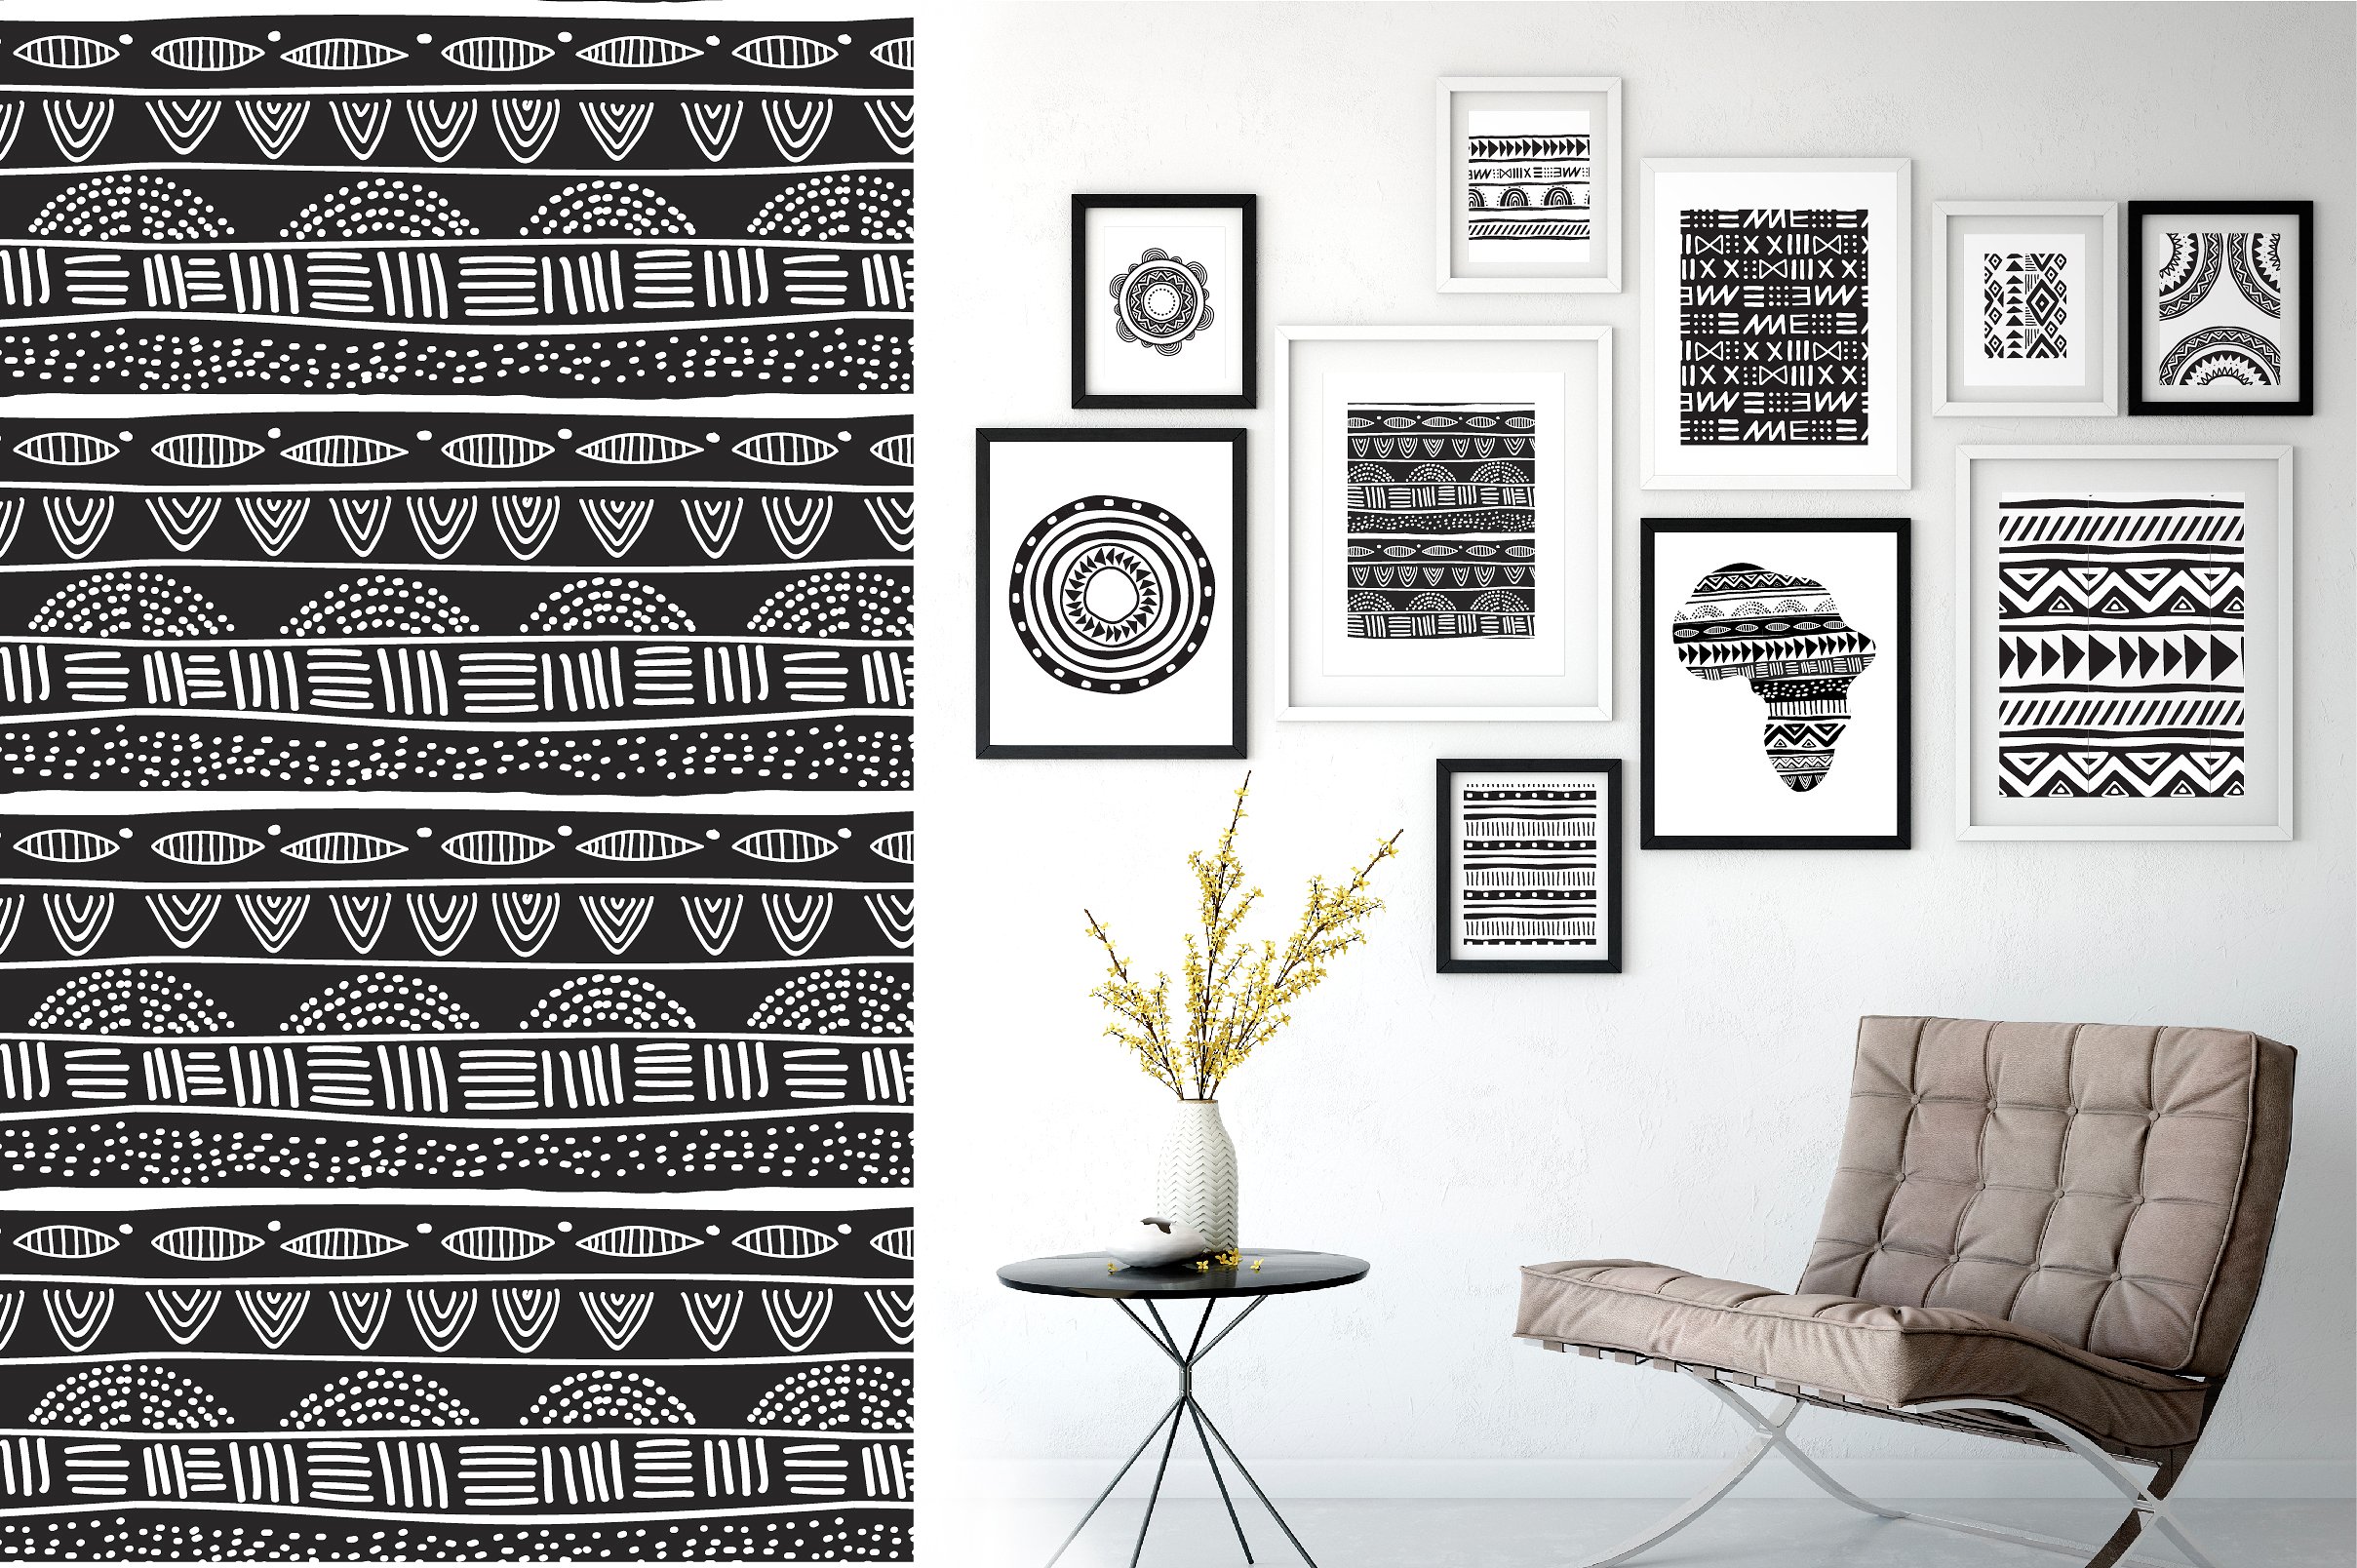 非洲梦系列工艺品设计素材包 African dream – patterns and brushes插图(4)